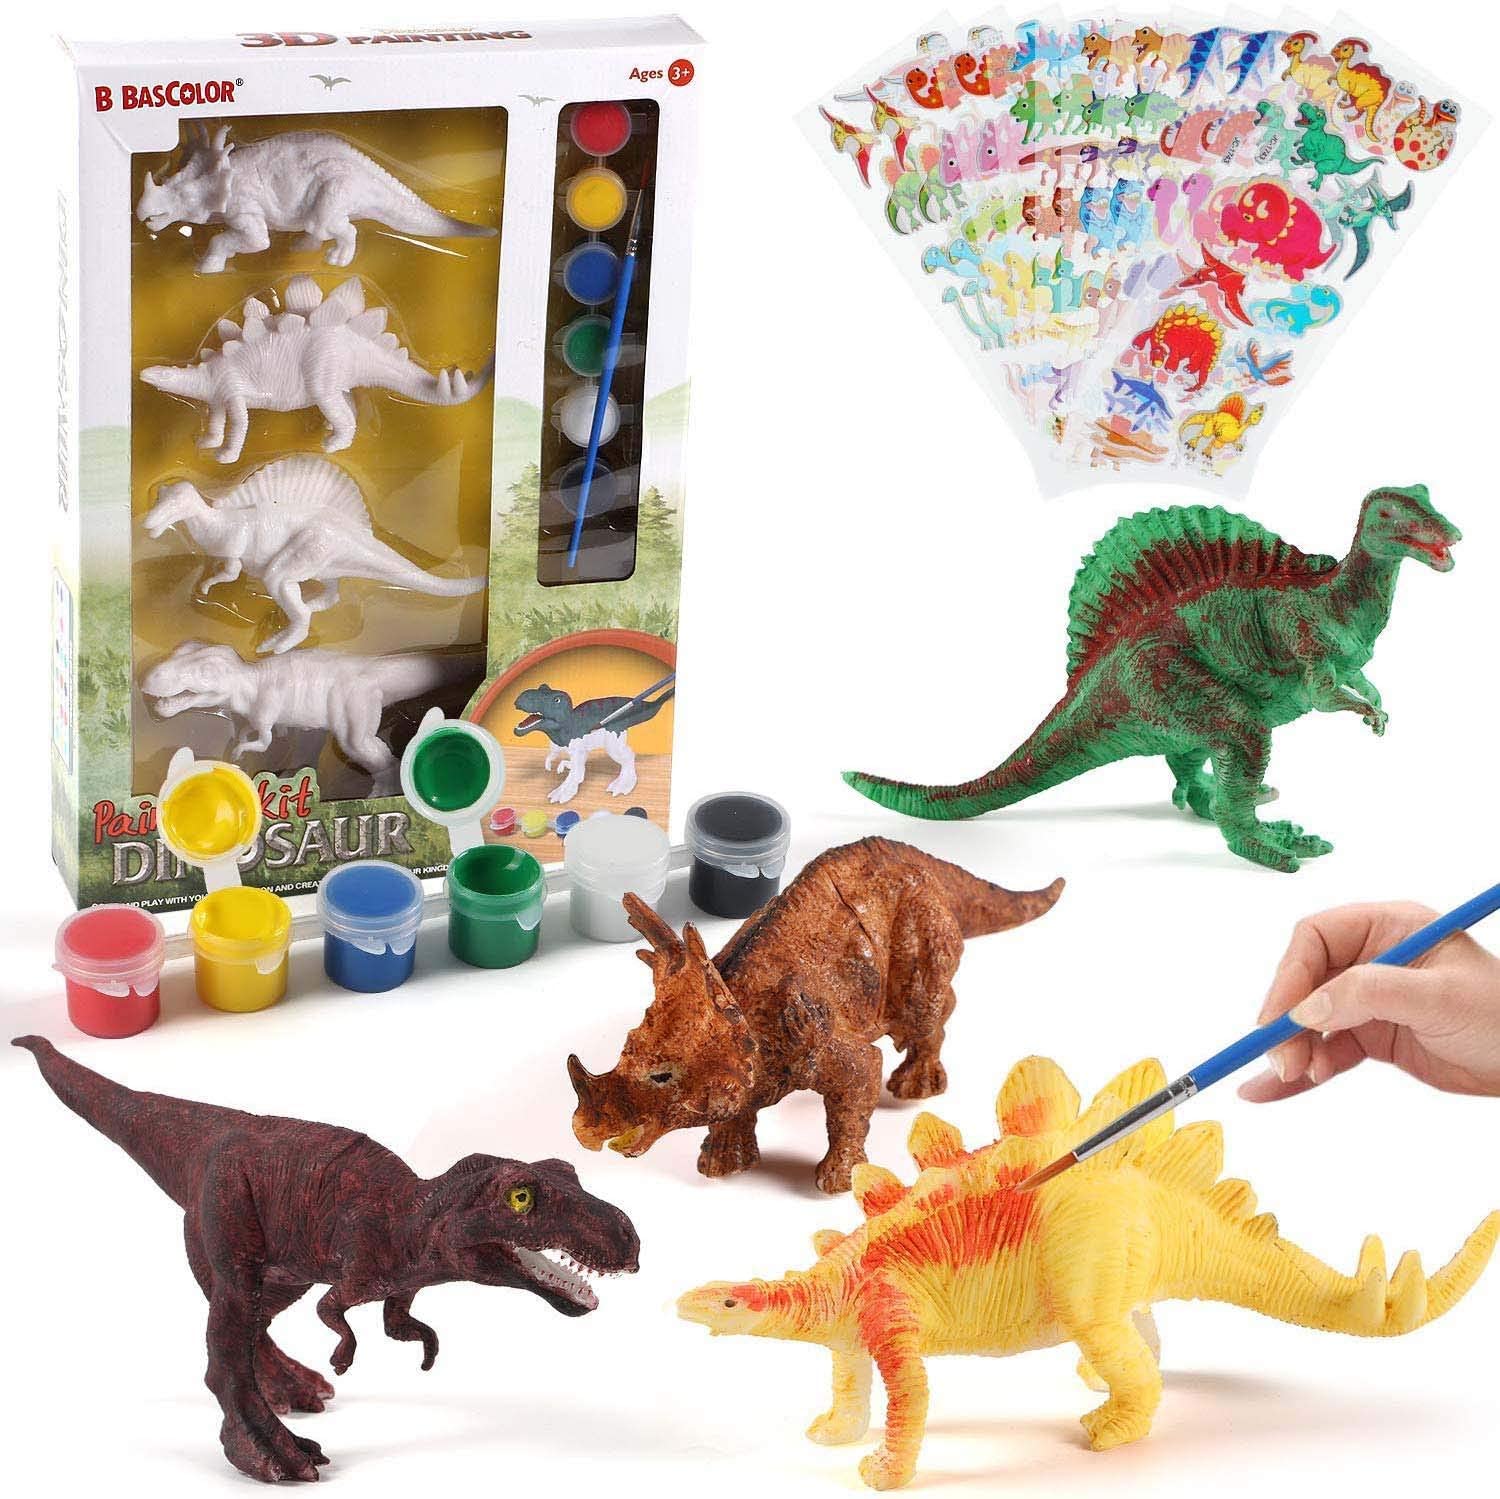 Painting Set Children Gift, Art Supplies Kit Kids